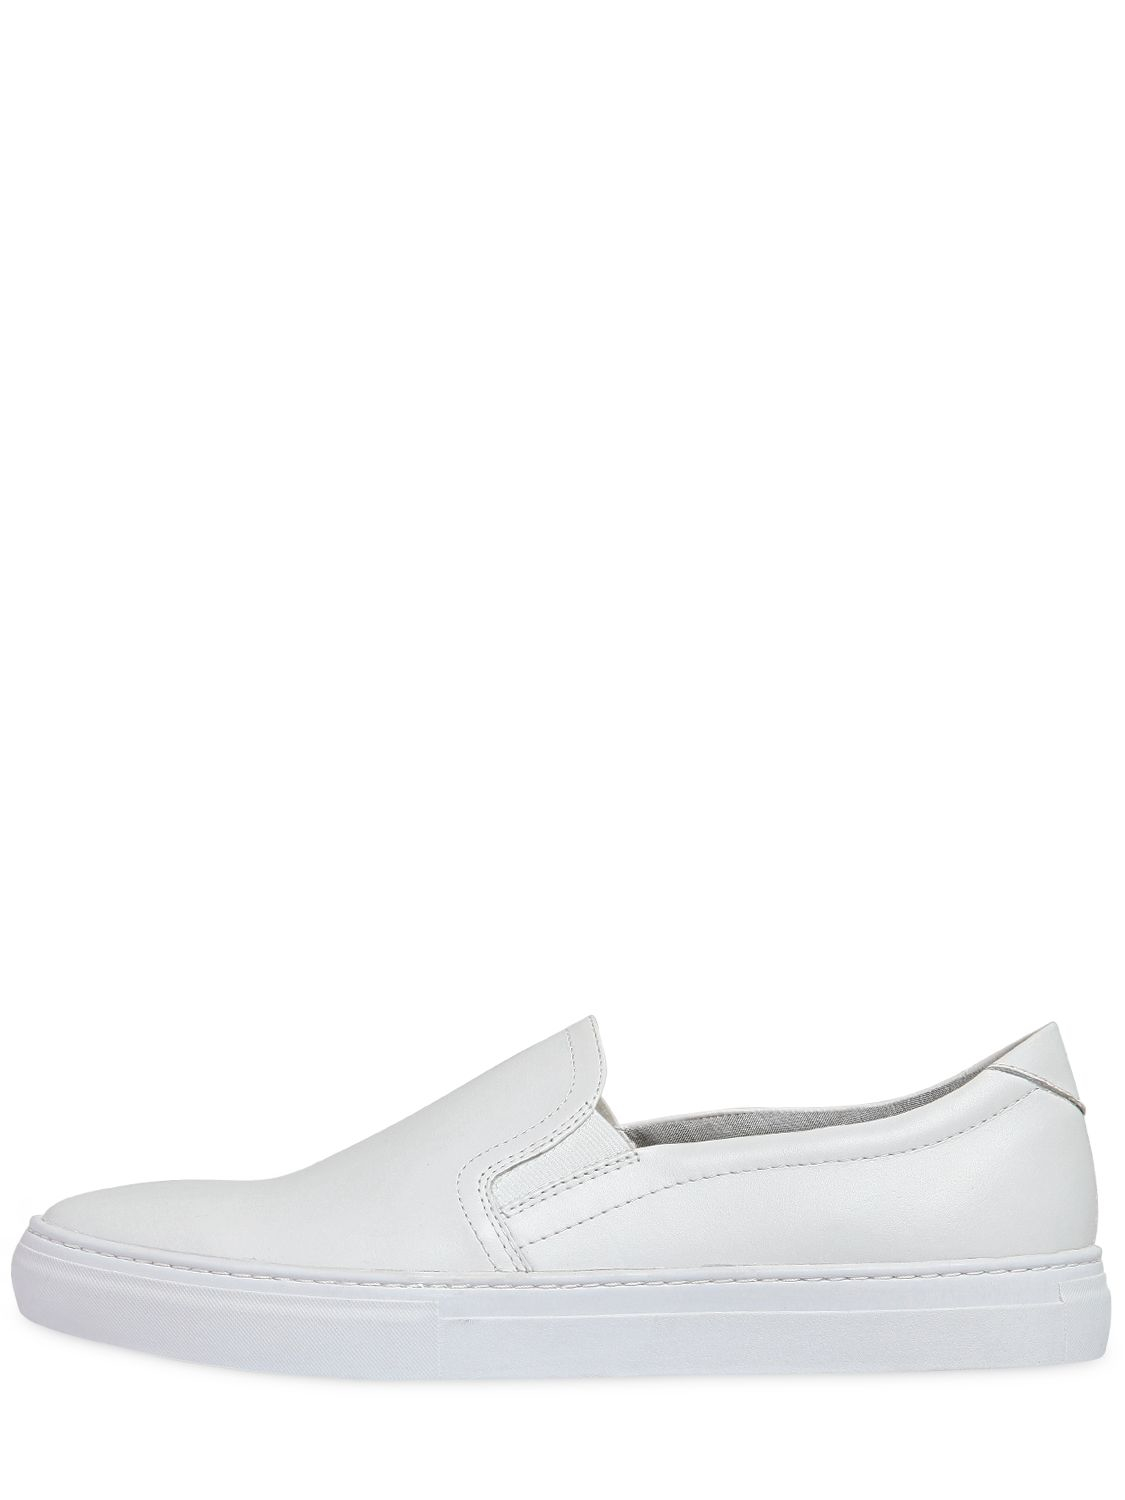 Lyst - Vagabond Leather Slip-on Sneakers in White for Men